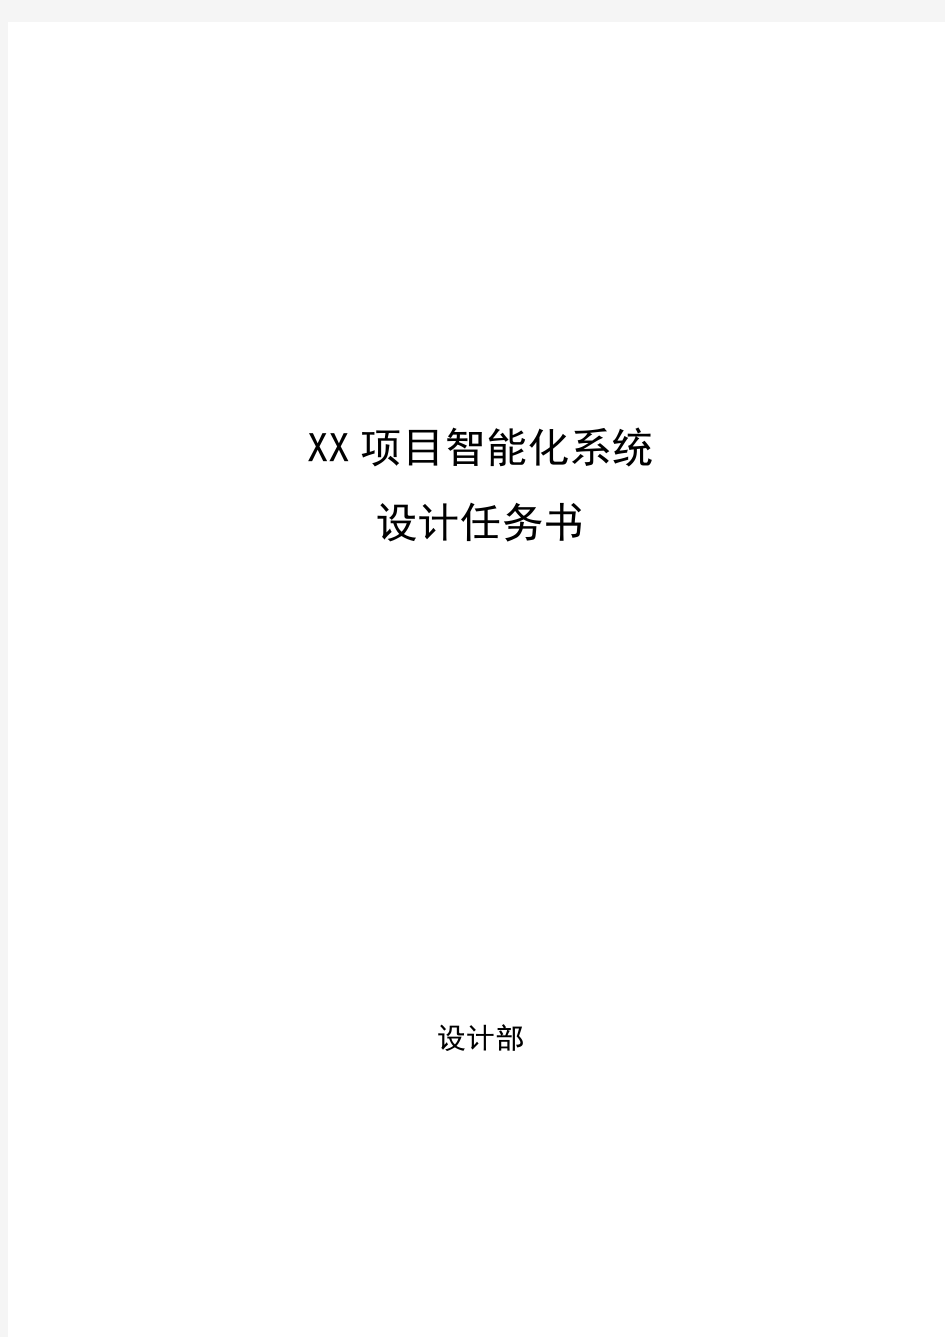 XX项目智能化系统设计任务书